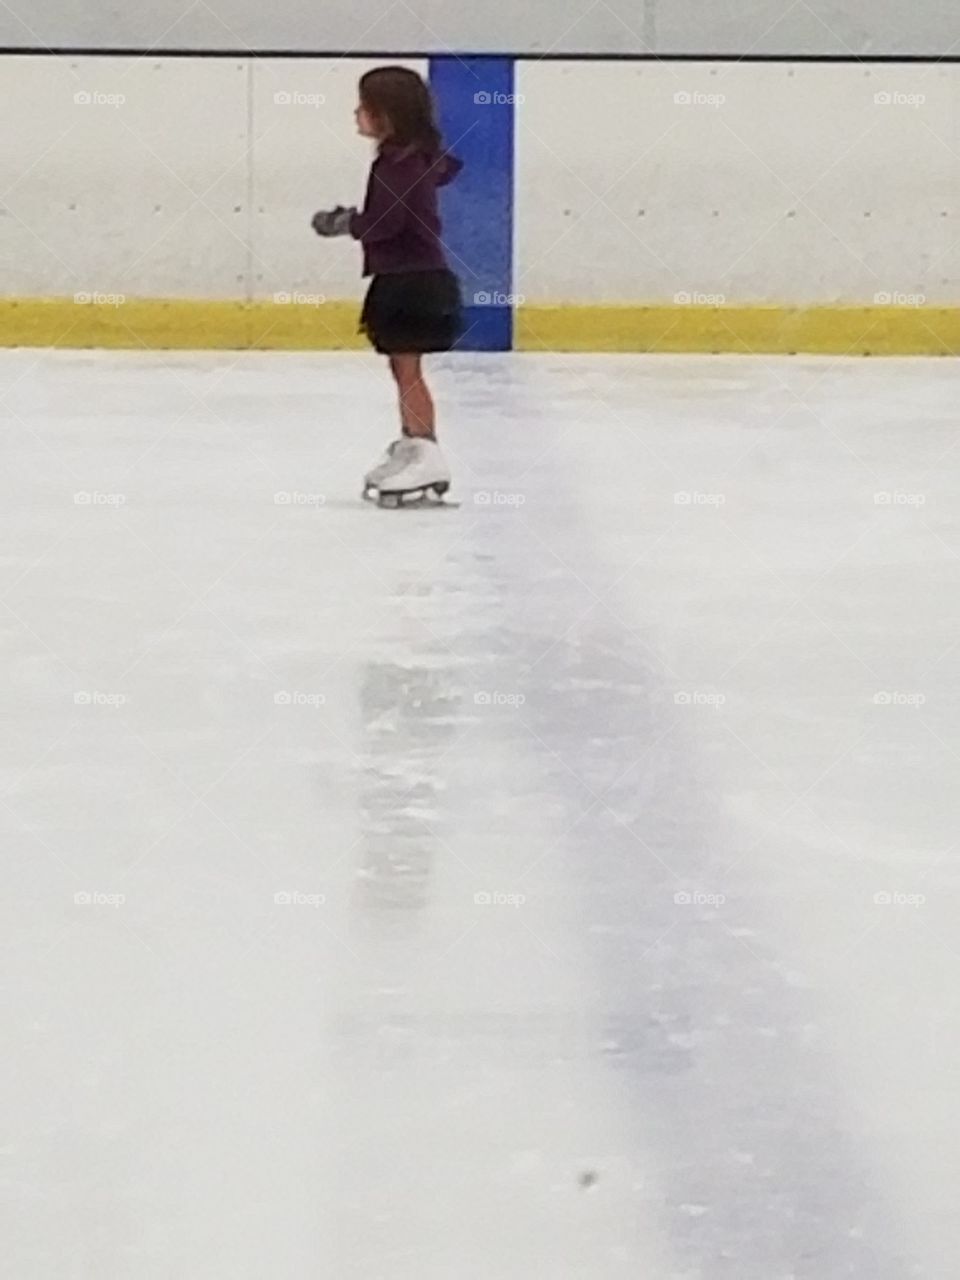 small child on ice